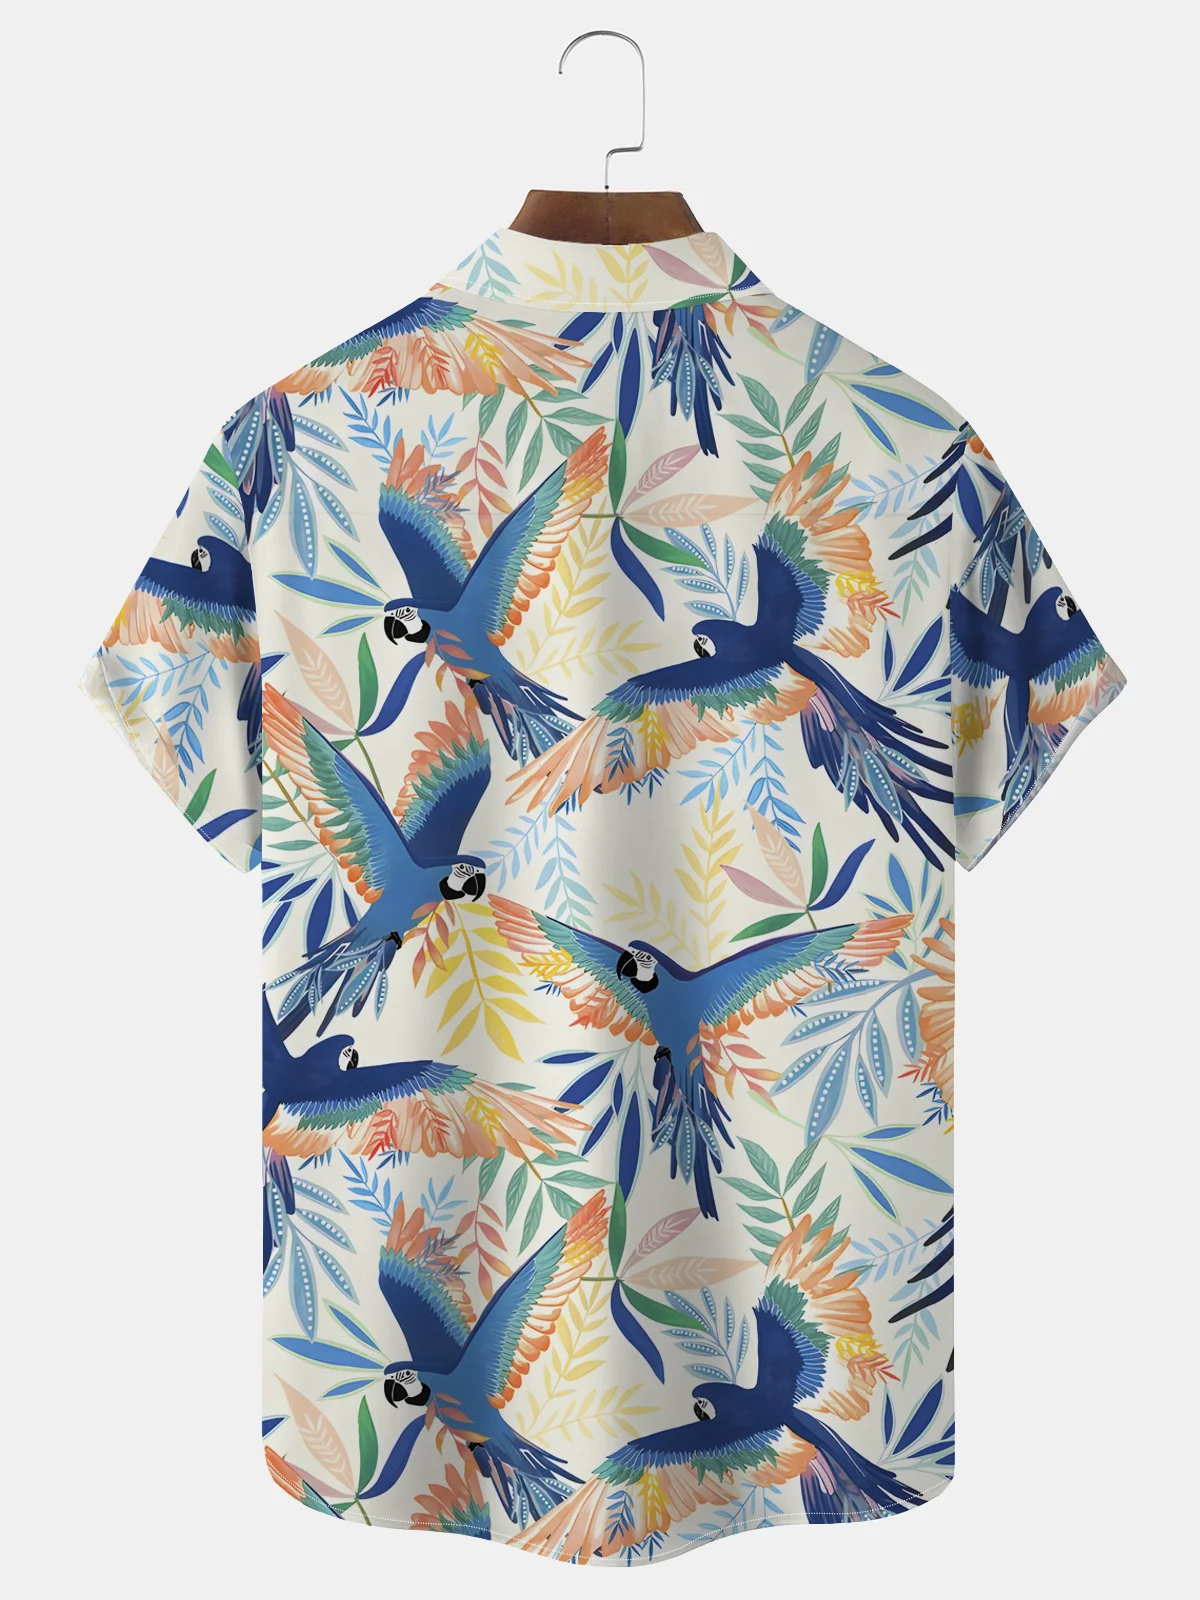 Royaura® Beach Holiday Parrot Men's Hawaiian Shirt Wrinkle Free Seersucker Pocket Camp Shirt Big Tall